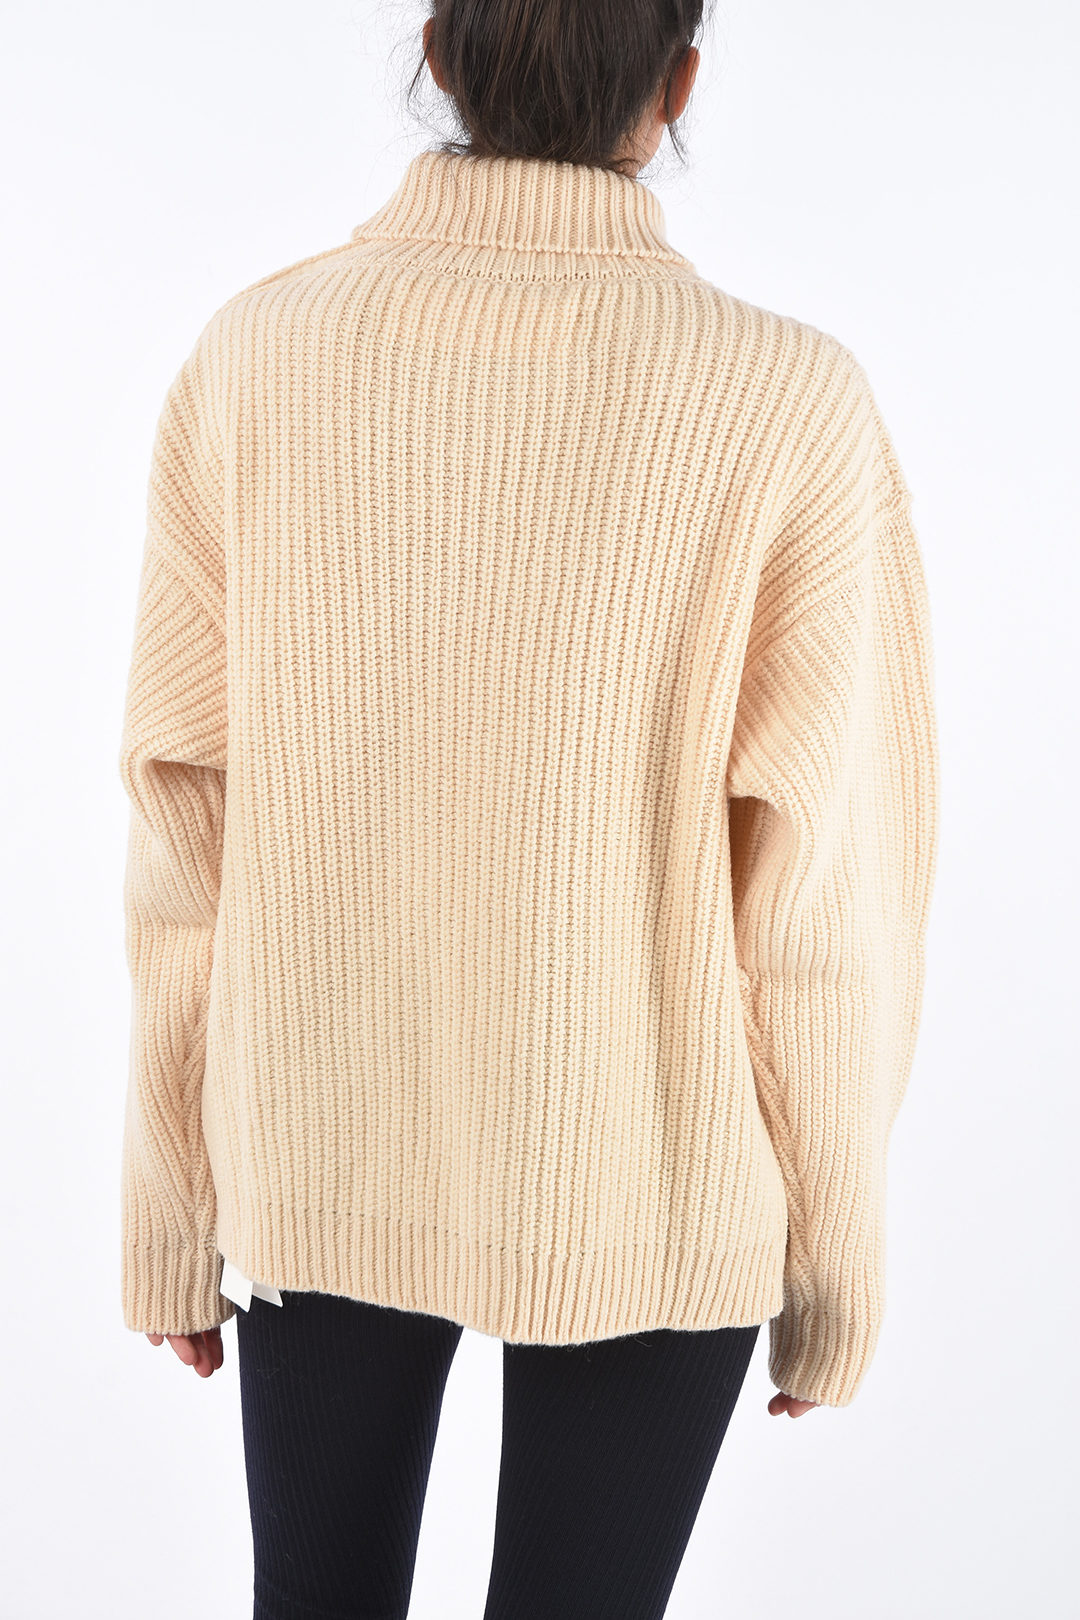 Jil Sander Wool Turtleneck Sweater in White Save 6% Womens Clothing Jumpers and knitwear Turtlenecks 